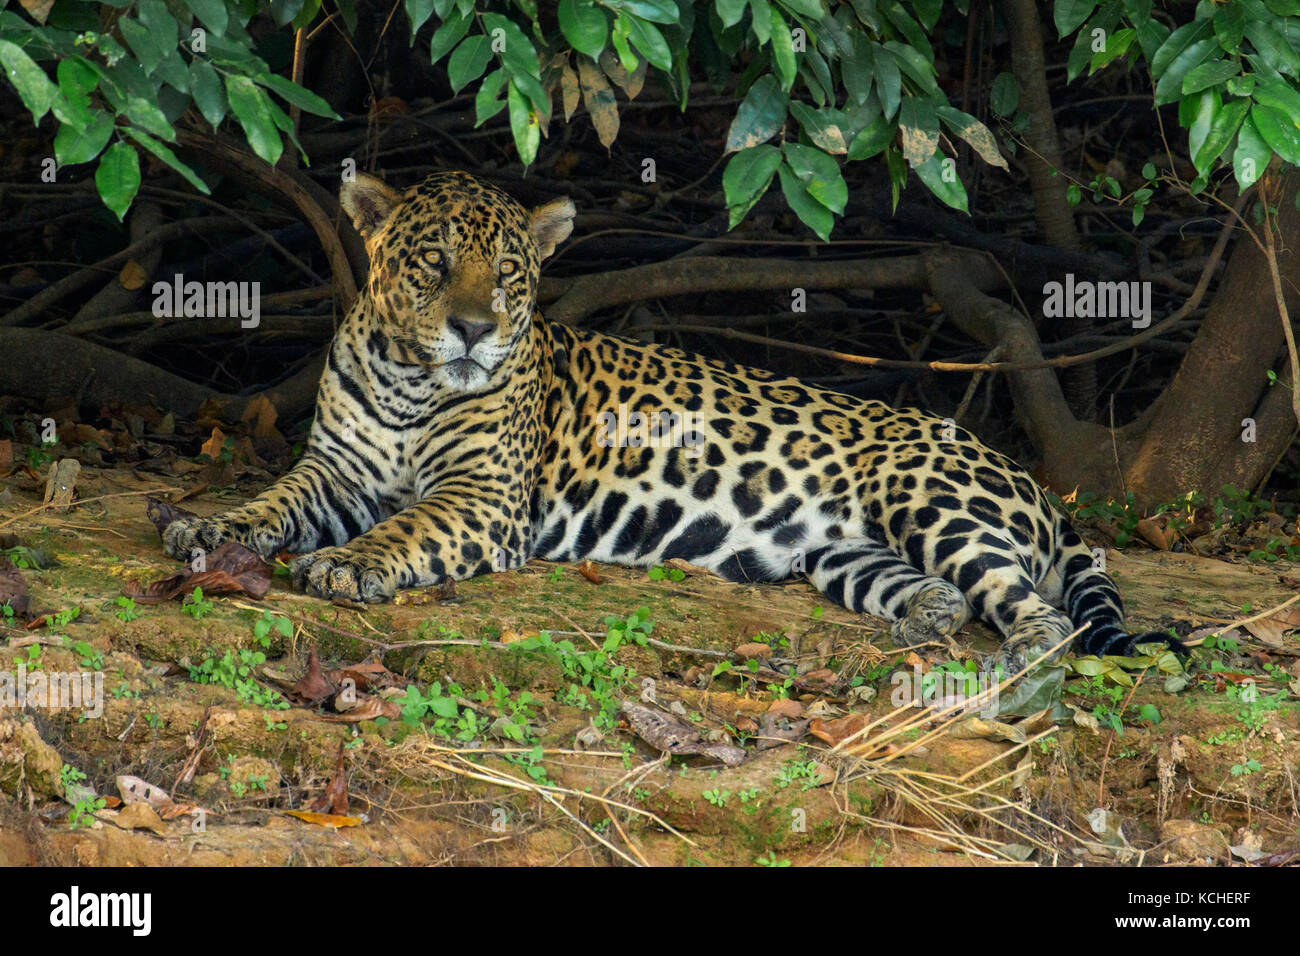 Jaguar en un área de humedales en la región del Pantanal de Brasil. Foto de stock